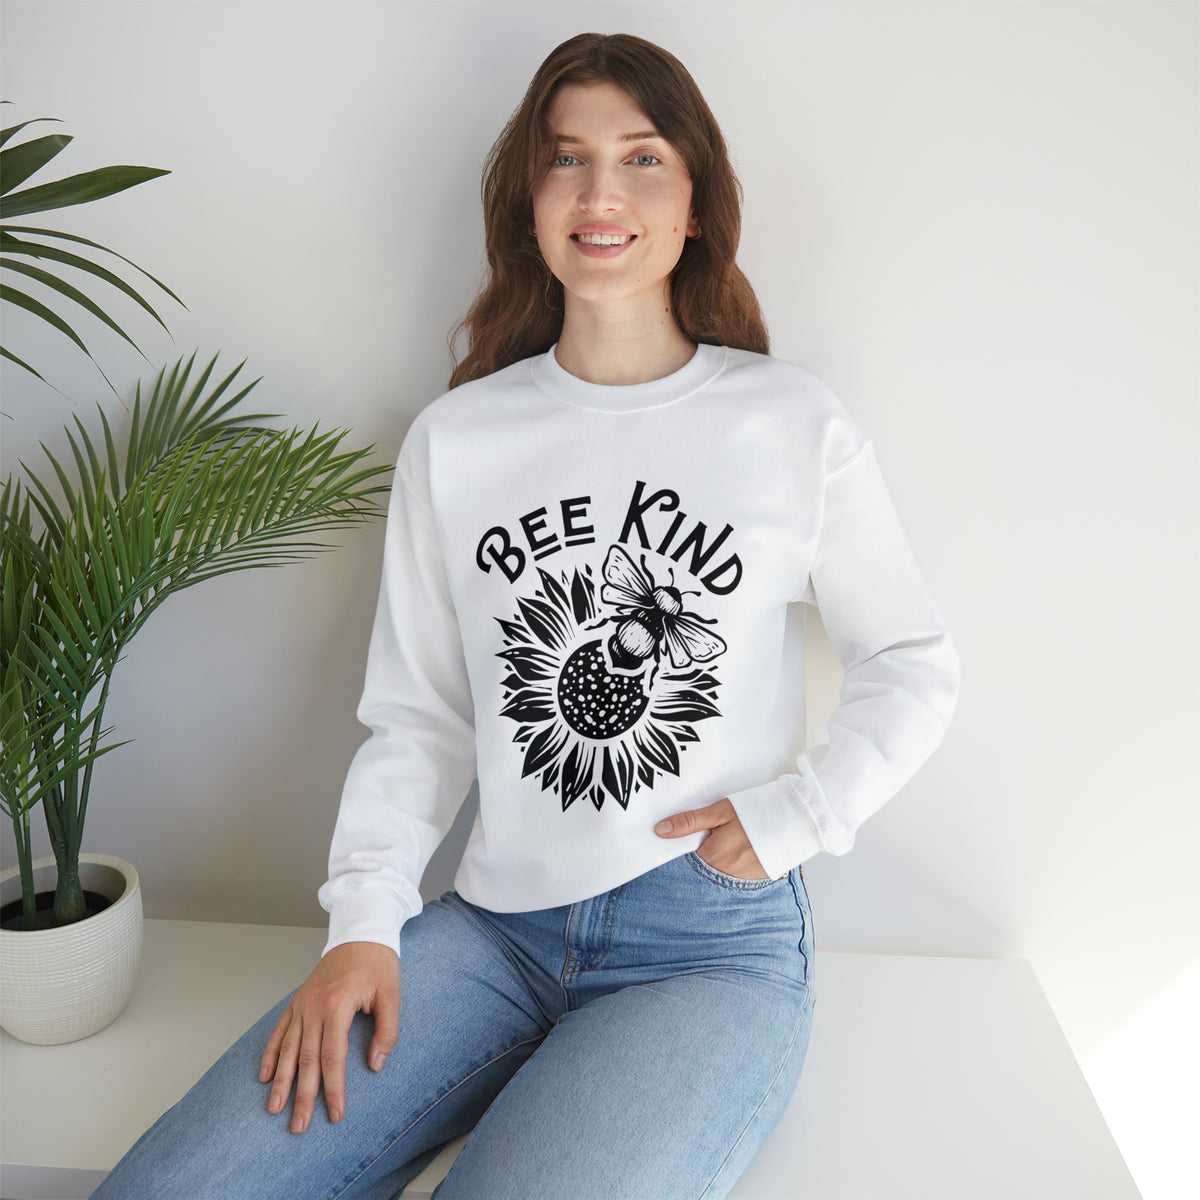 Bee Kind Inspirational Sunflower Shirt | Be Kind Gift | Unisex Crewneck Sweatshirt